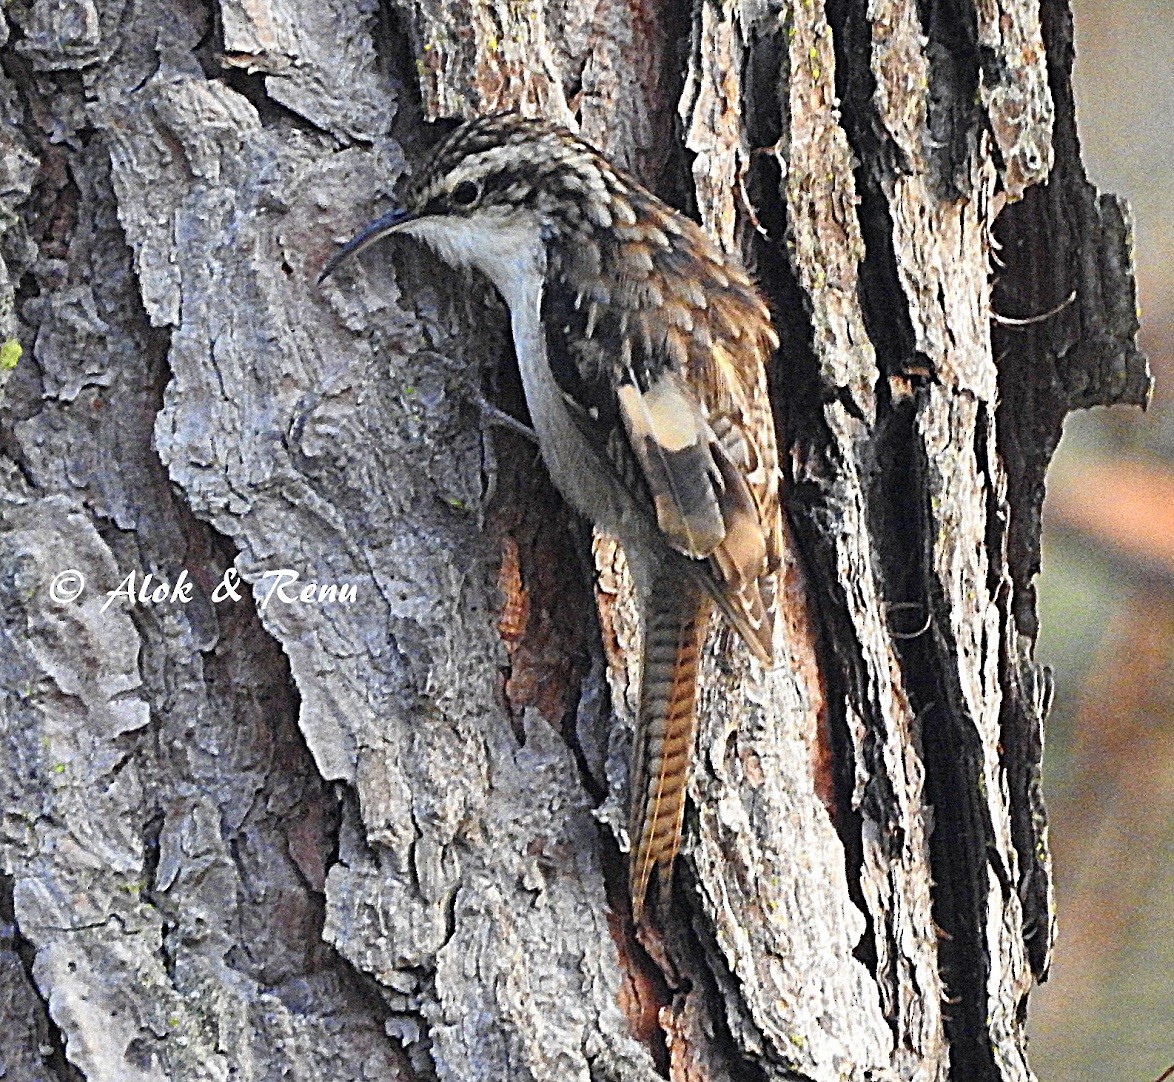 Bar-tailed Treecreeper - Alok Tewari